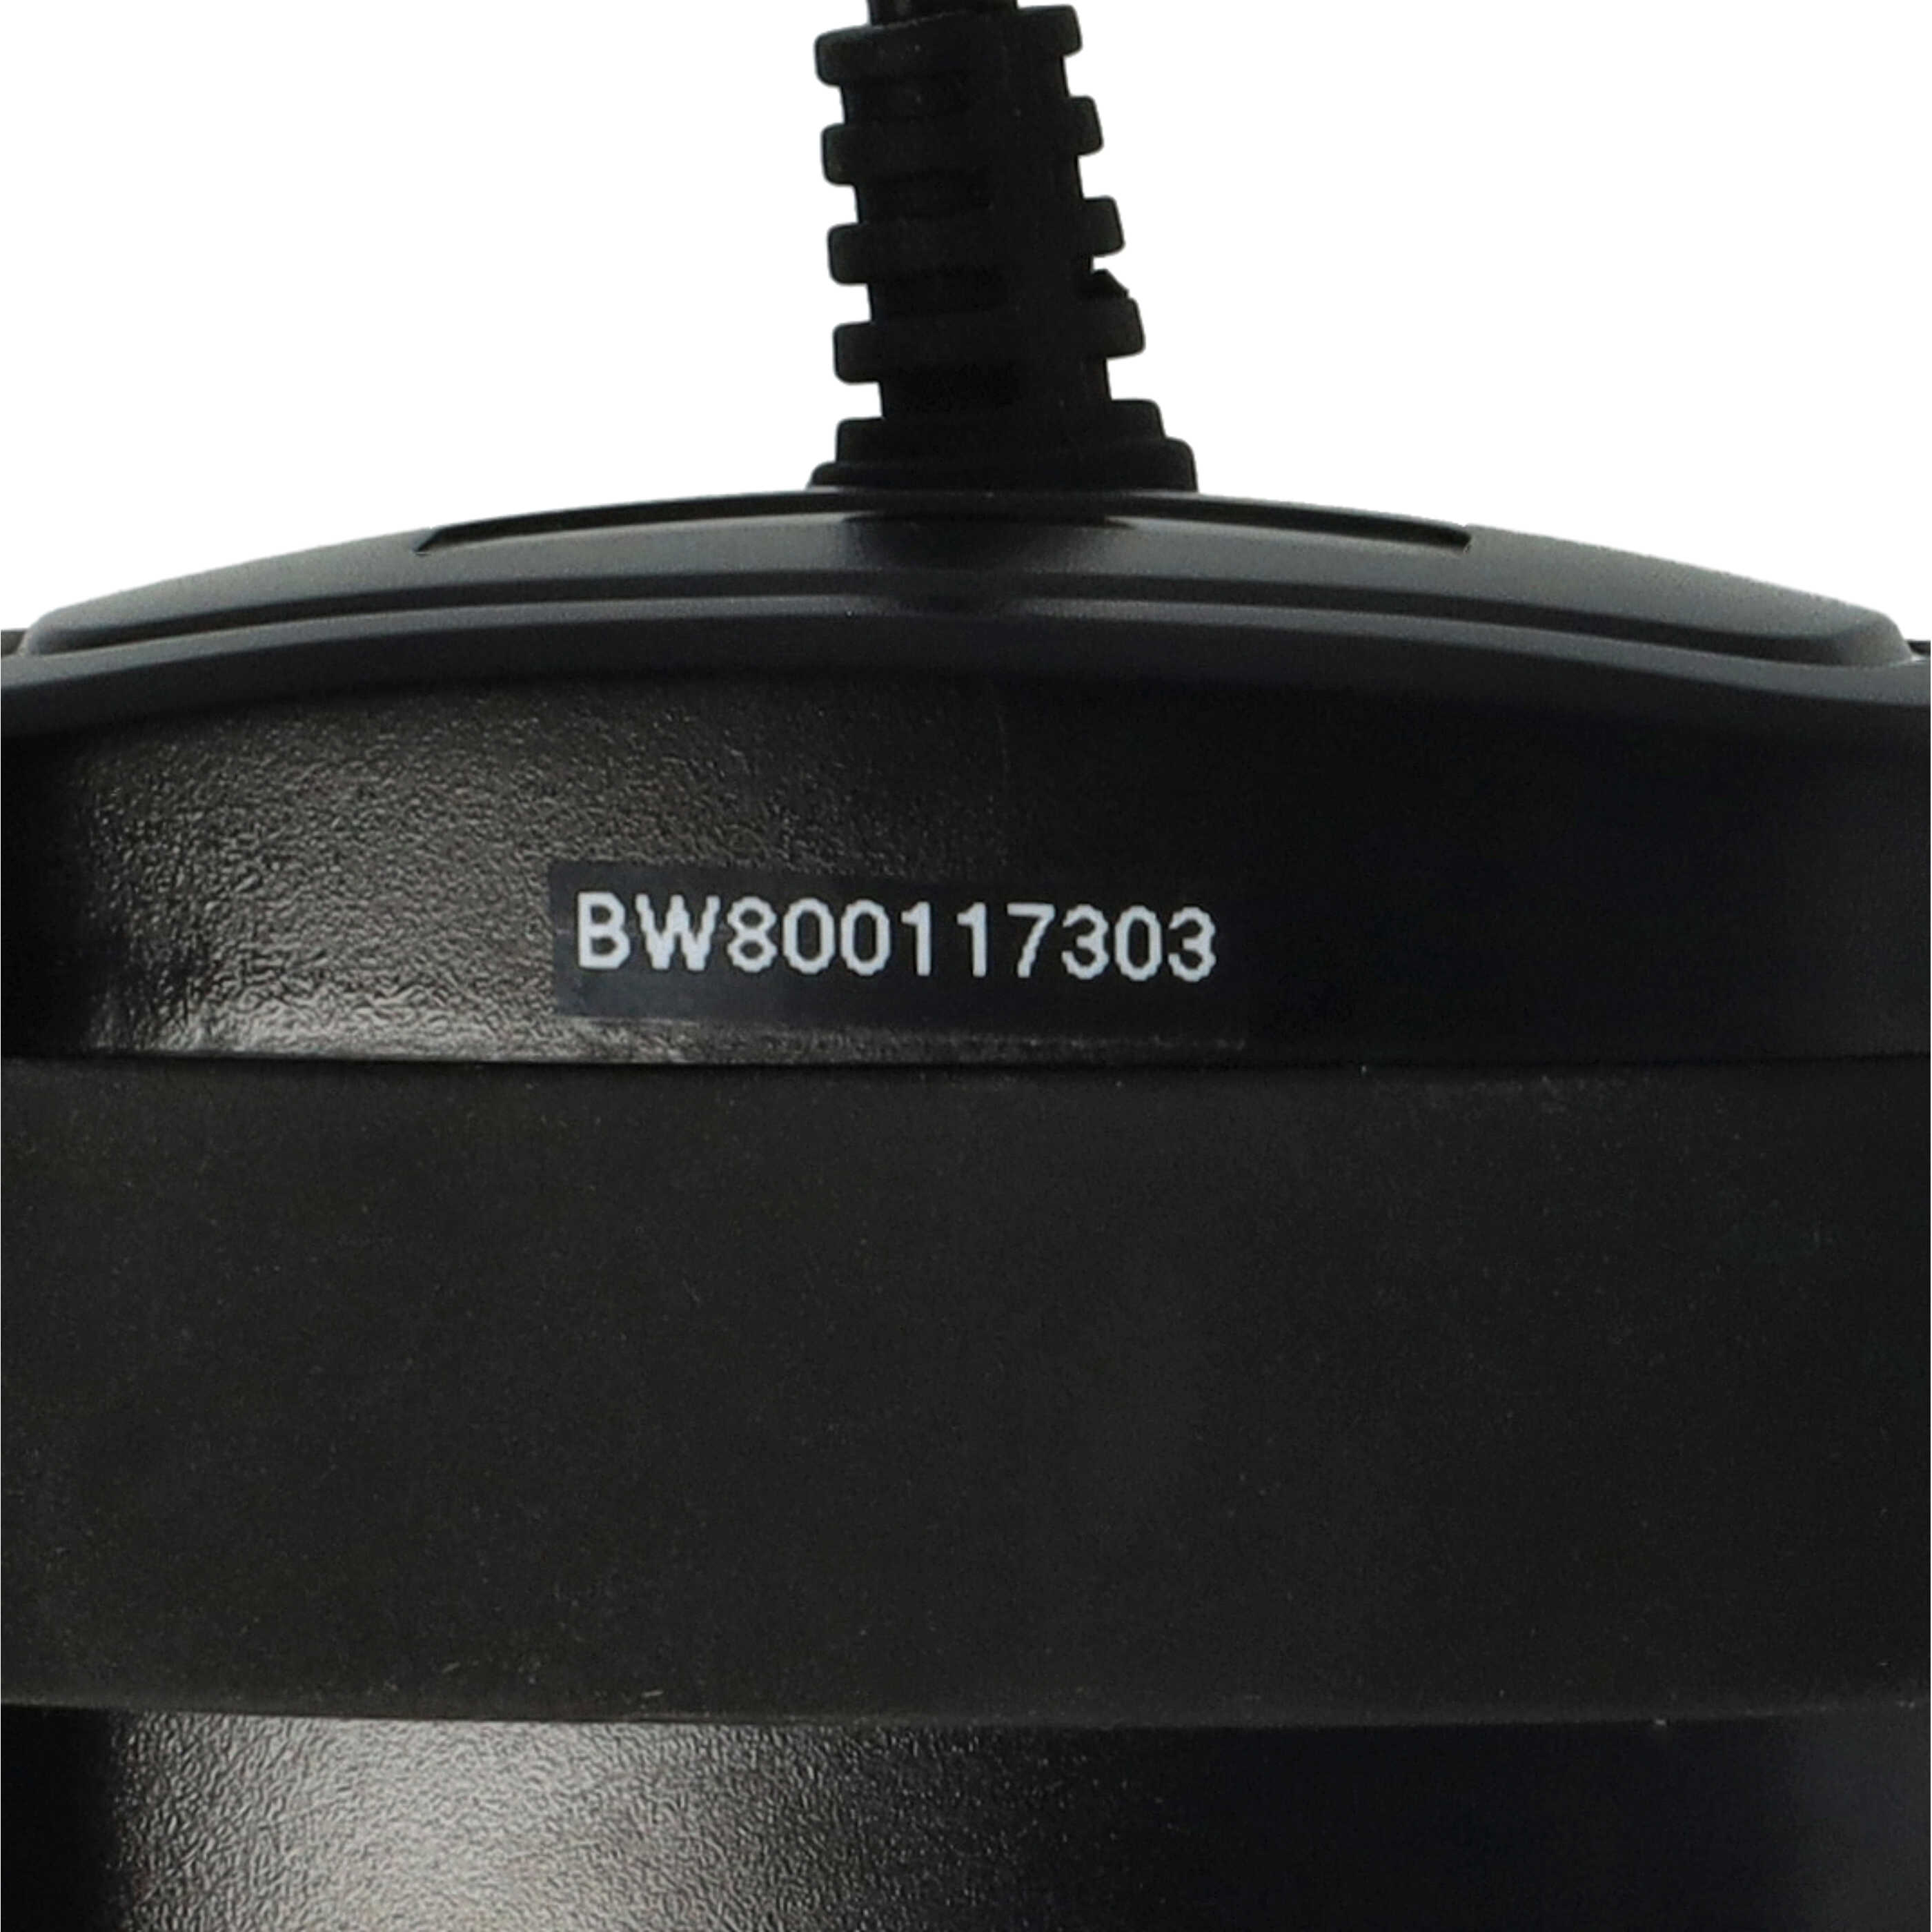 Li-Ion-battery pack- 9000mAh 8.4V waterproof - for bicycle lamp light